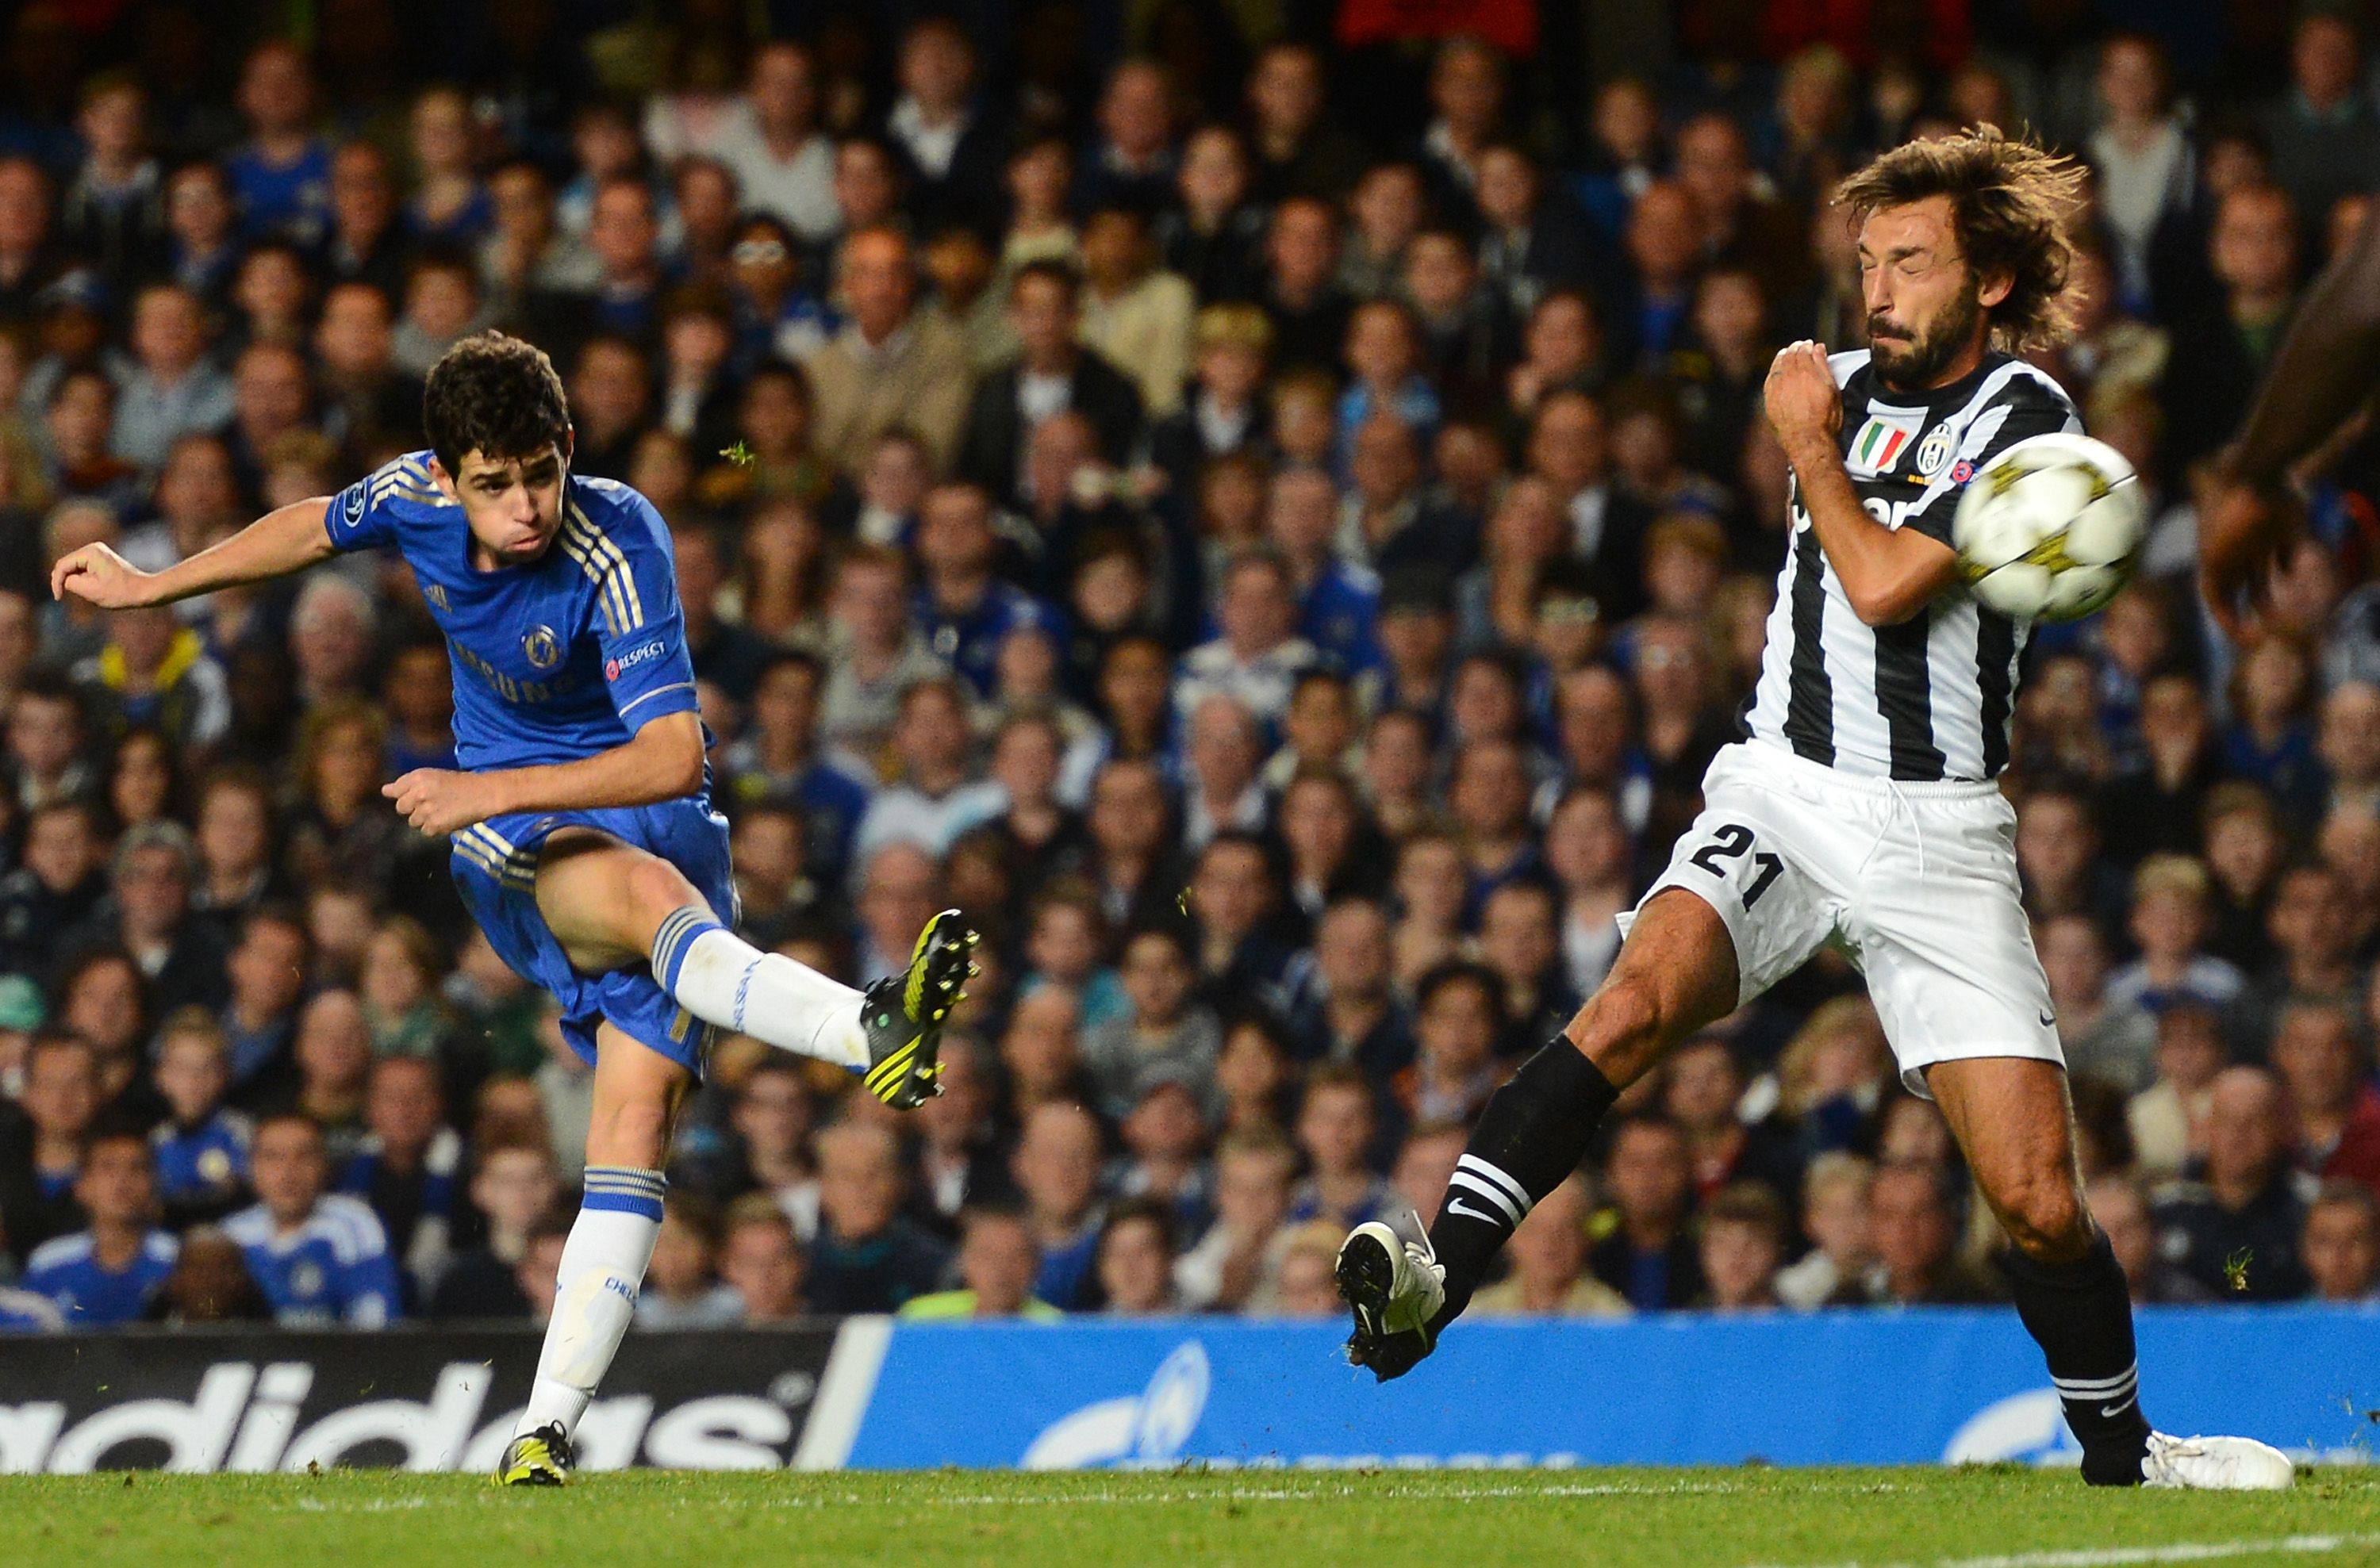 Oscar scores a goal for Chelsea vs Juventus